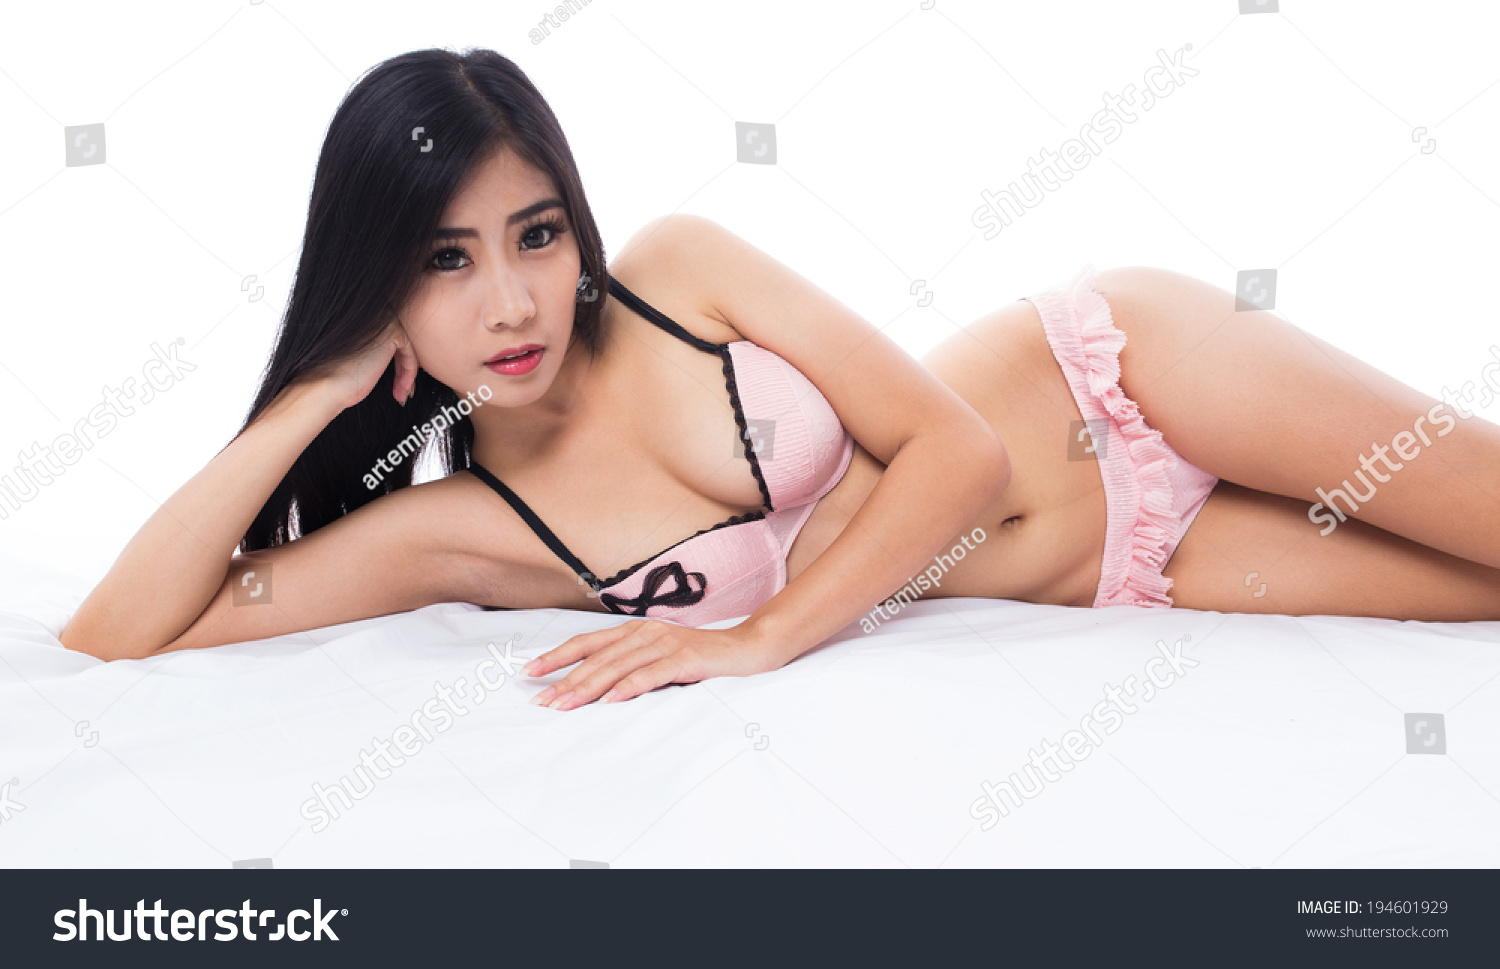 czar andrei herrera recommends Sexy Asian Girls In Lingerie